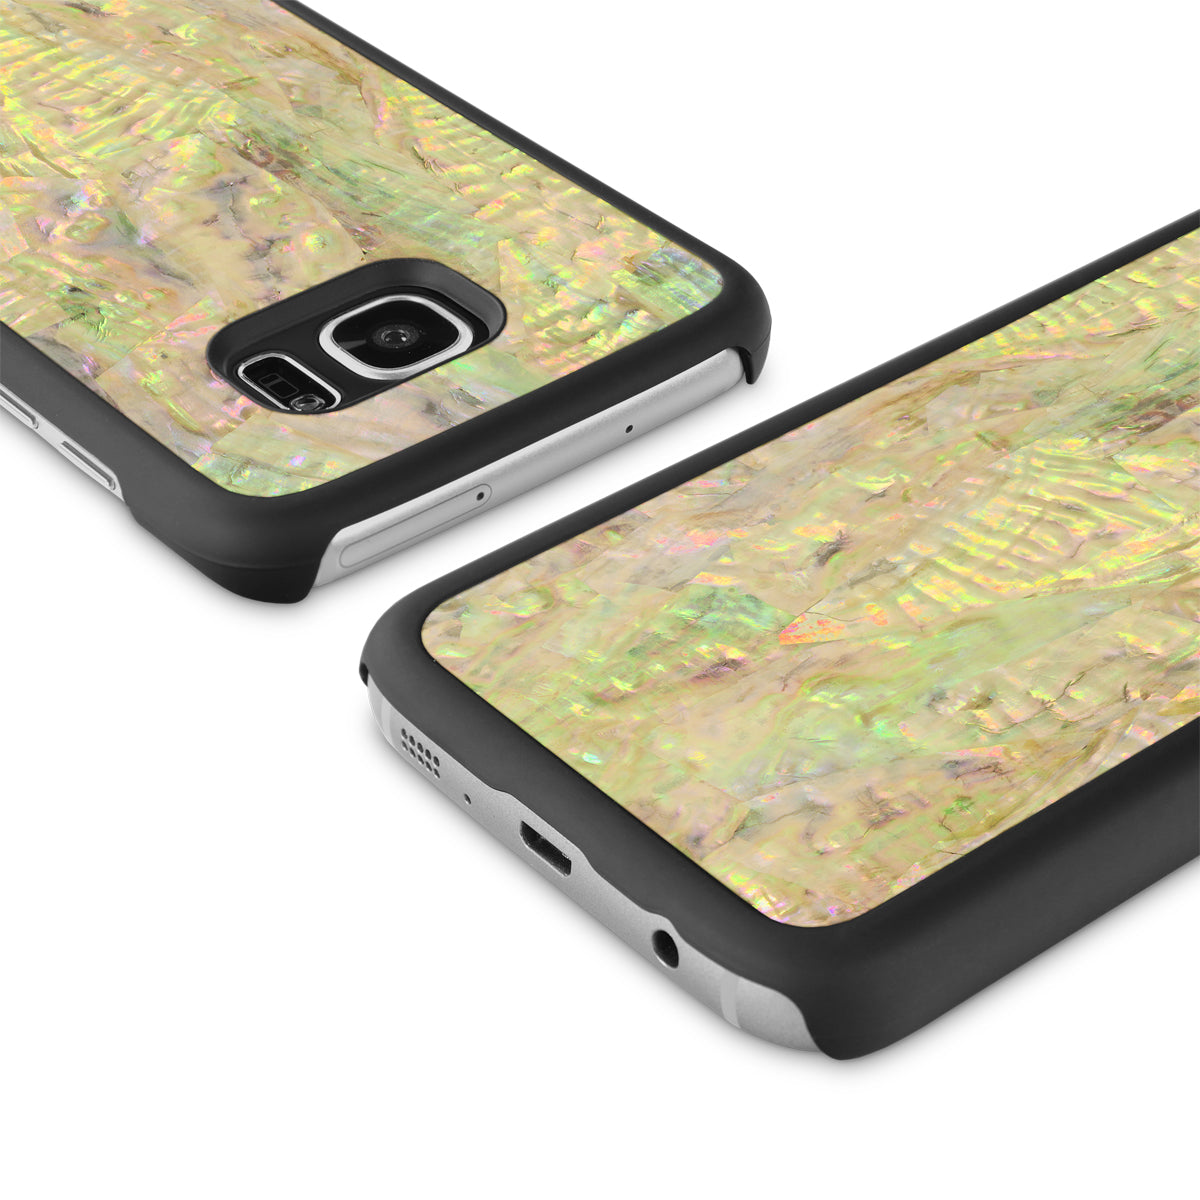 Samsung Galaxy S7 Edge — Shell Snap Case